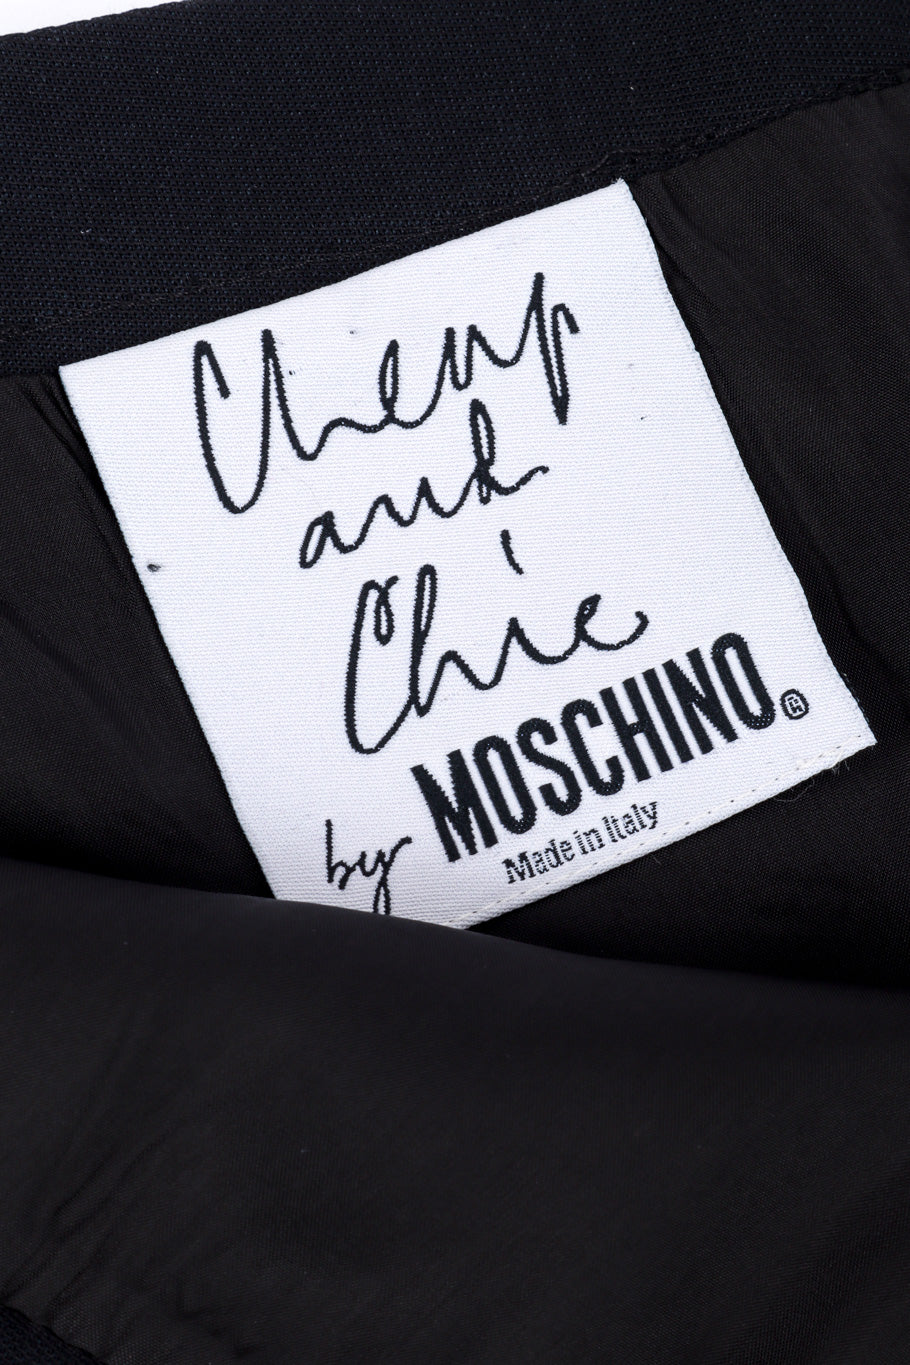 Irony of Design Text Blazer & Skirt Suit by Moschino skirt label @recessla